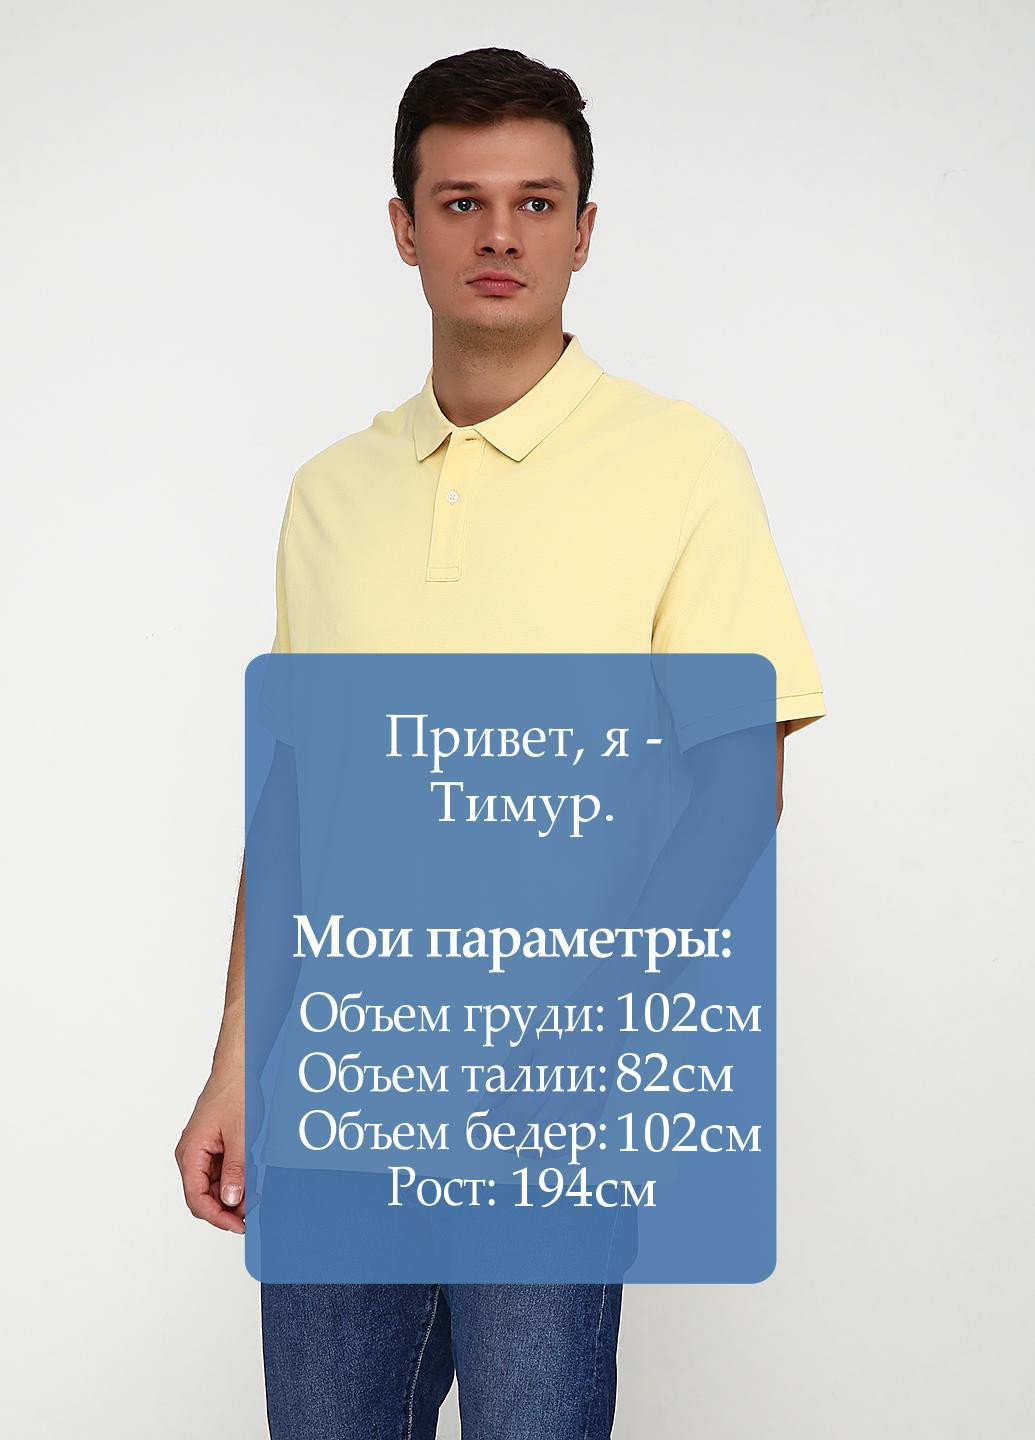 Желтая футболка-поло для мужчин Basics однотонная